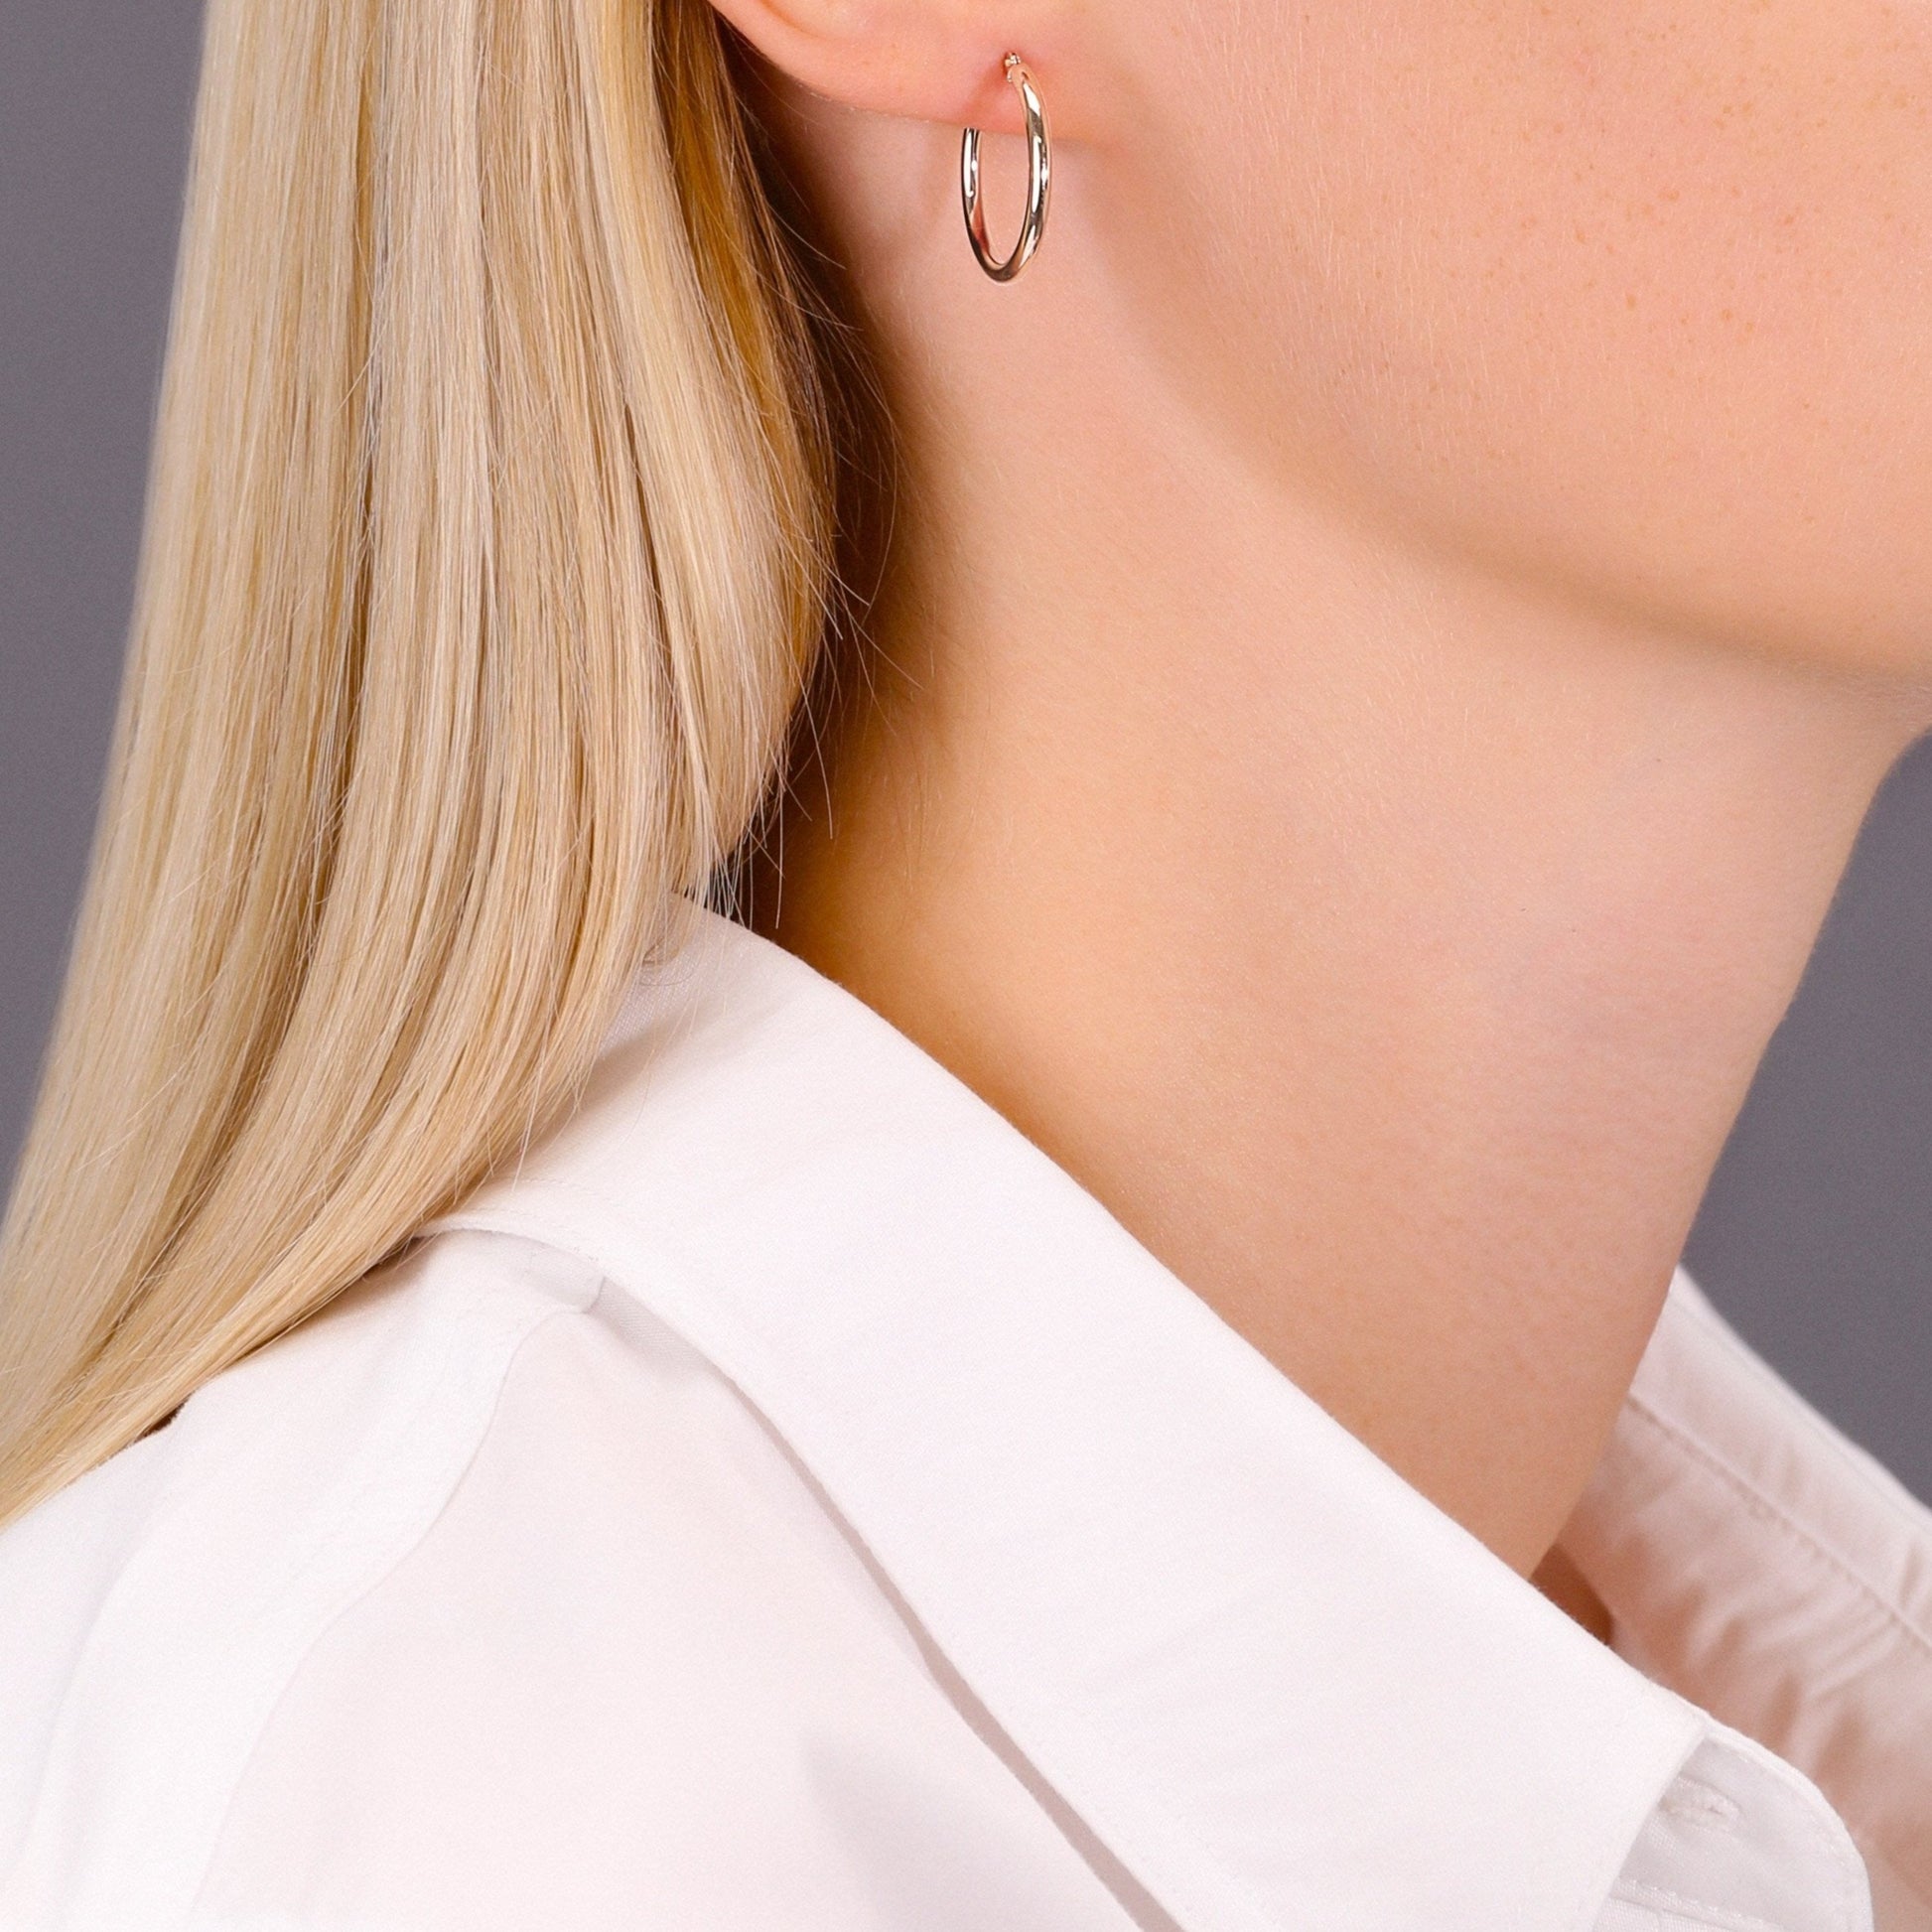 Hoop earrings - Metal & strass, gold & pink — Fashion